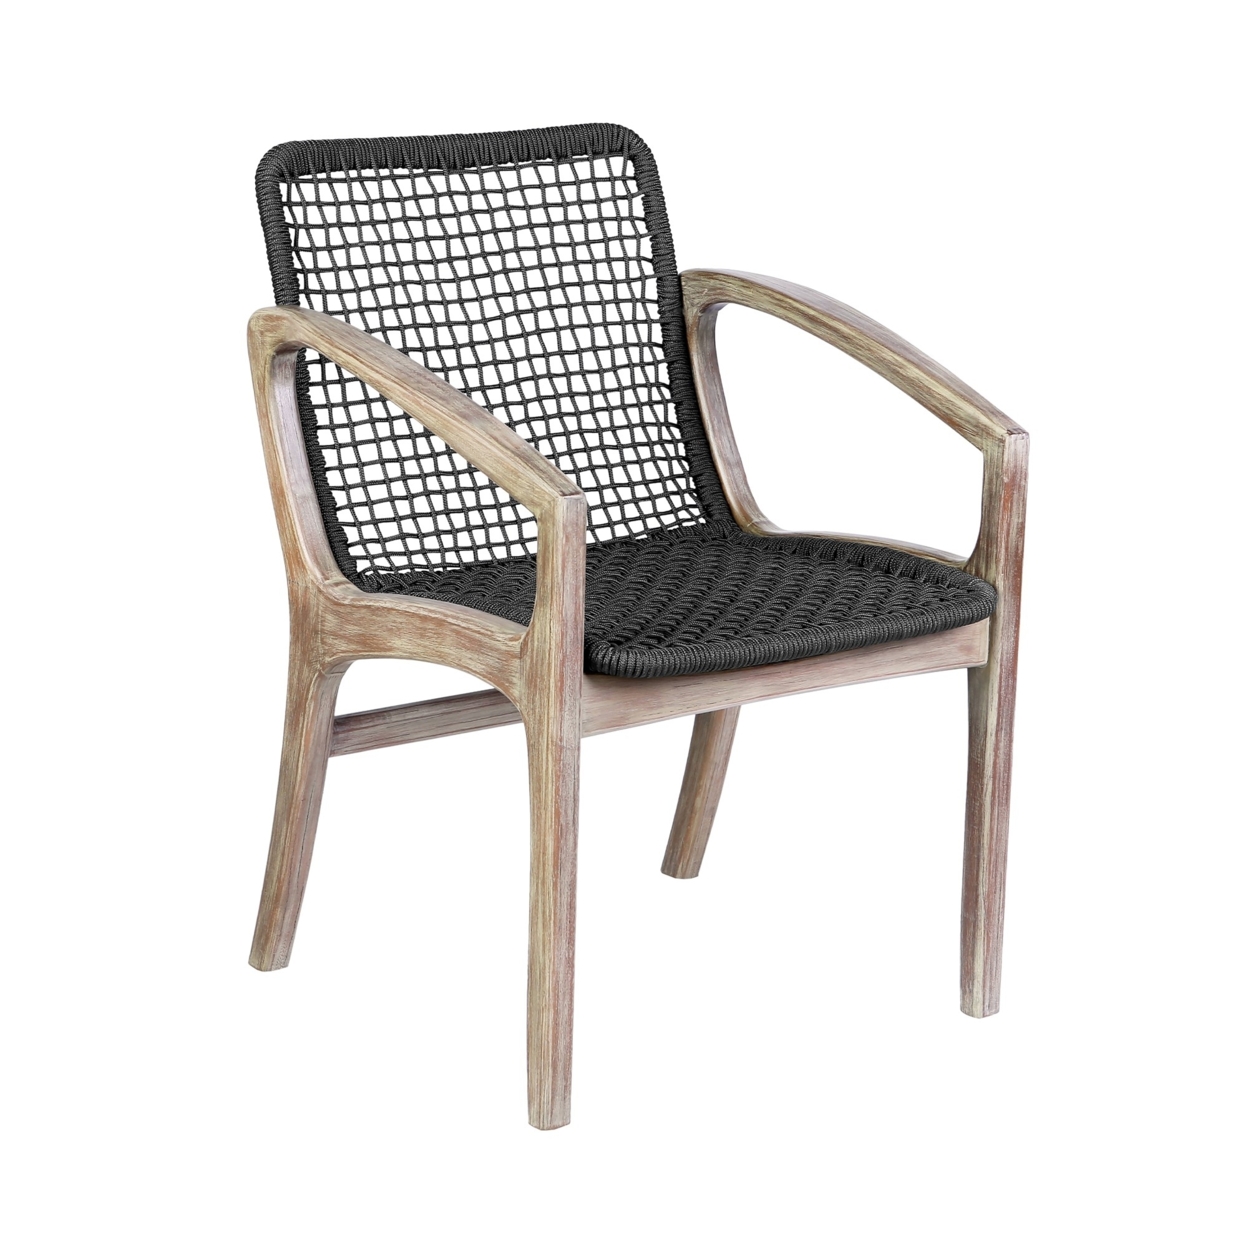 Tye 25 Inch Patio DIning Chair, Light Eucalyptus Wood, Dark Gray Rope Seat- Saltoro Sherpi